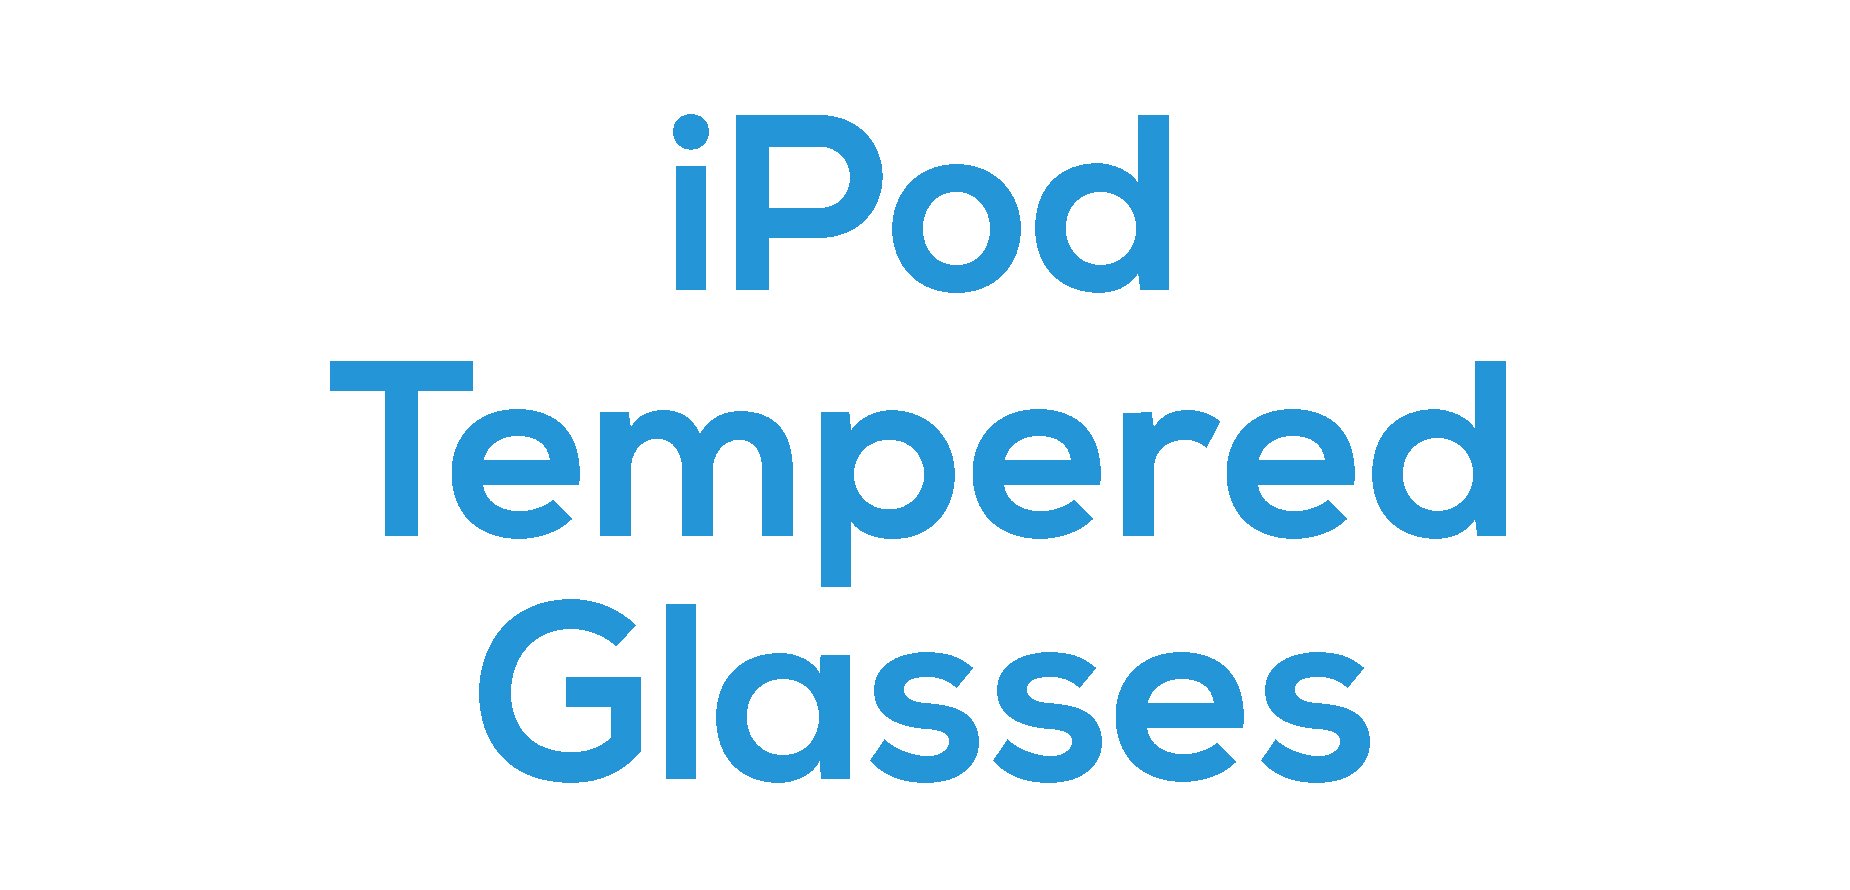 iPod Tempered Glasses